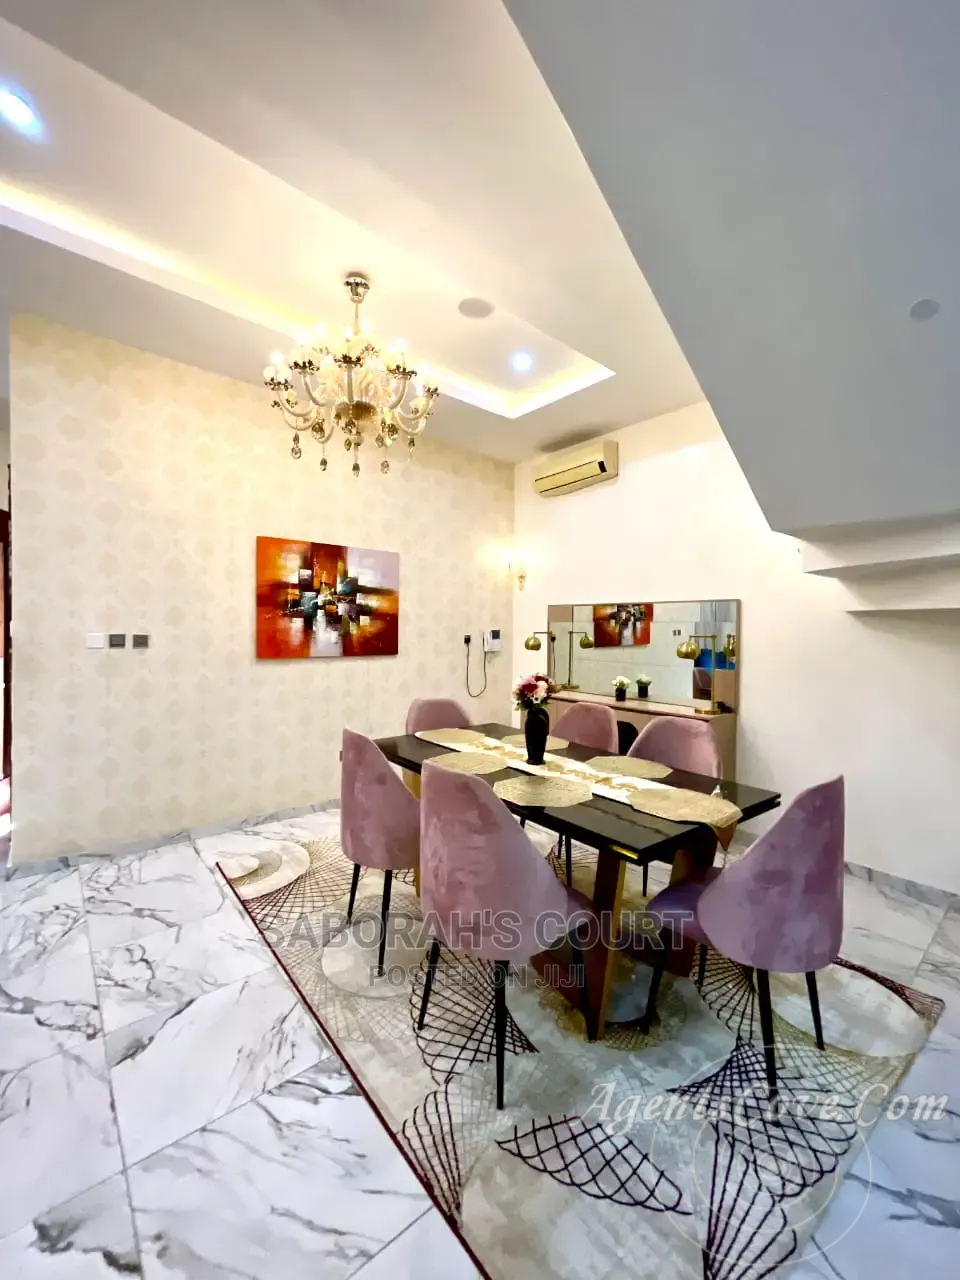 Furnished 5bdrm House In Lekki Phase 1 For Sale